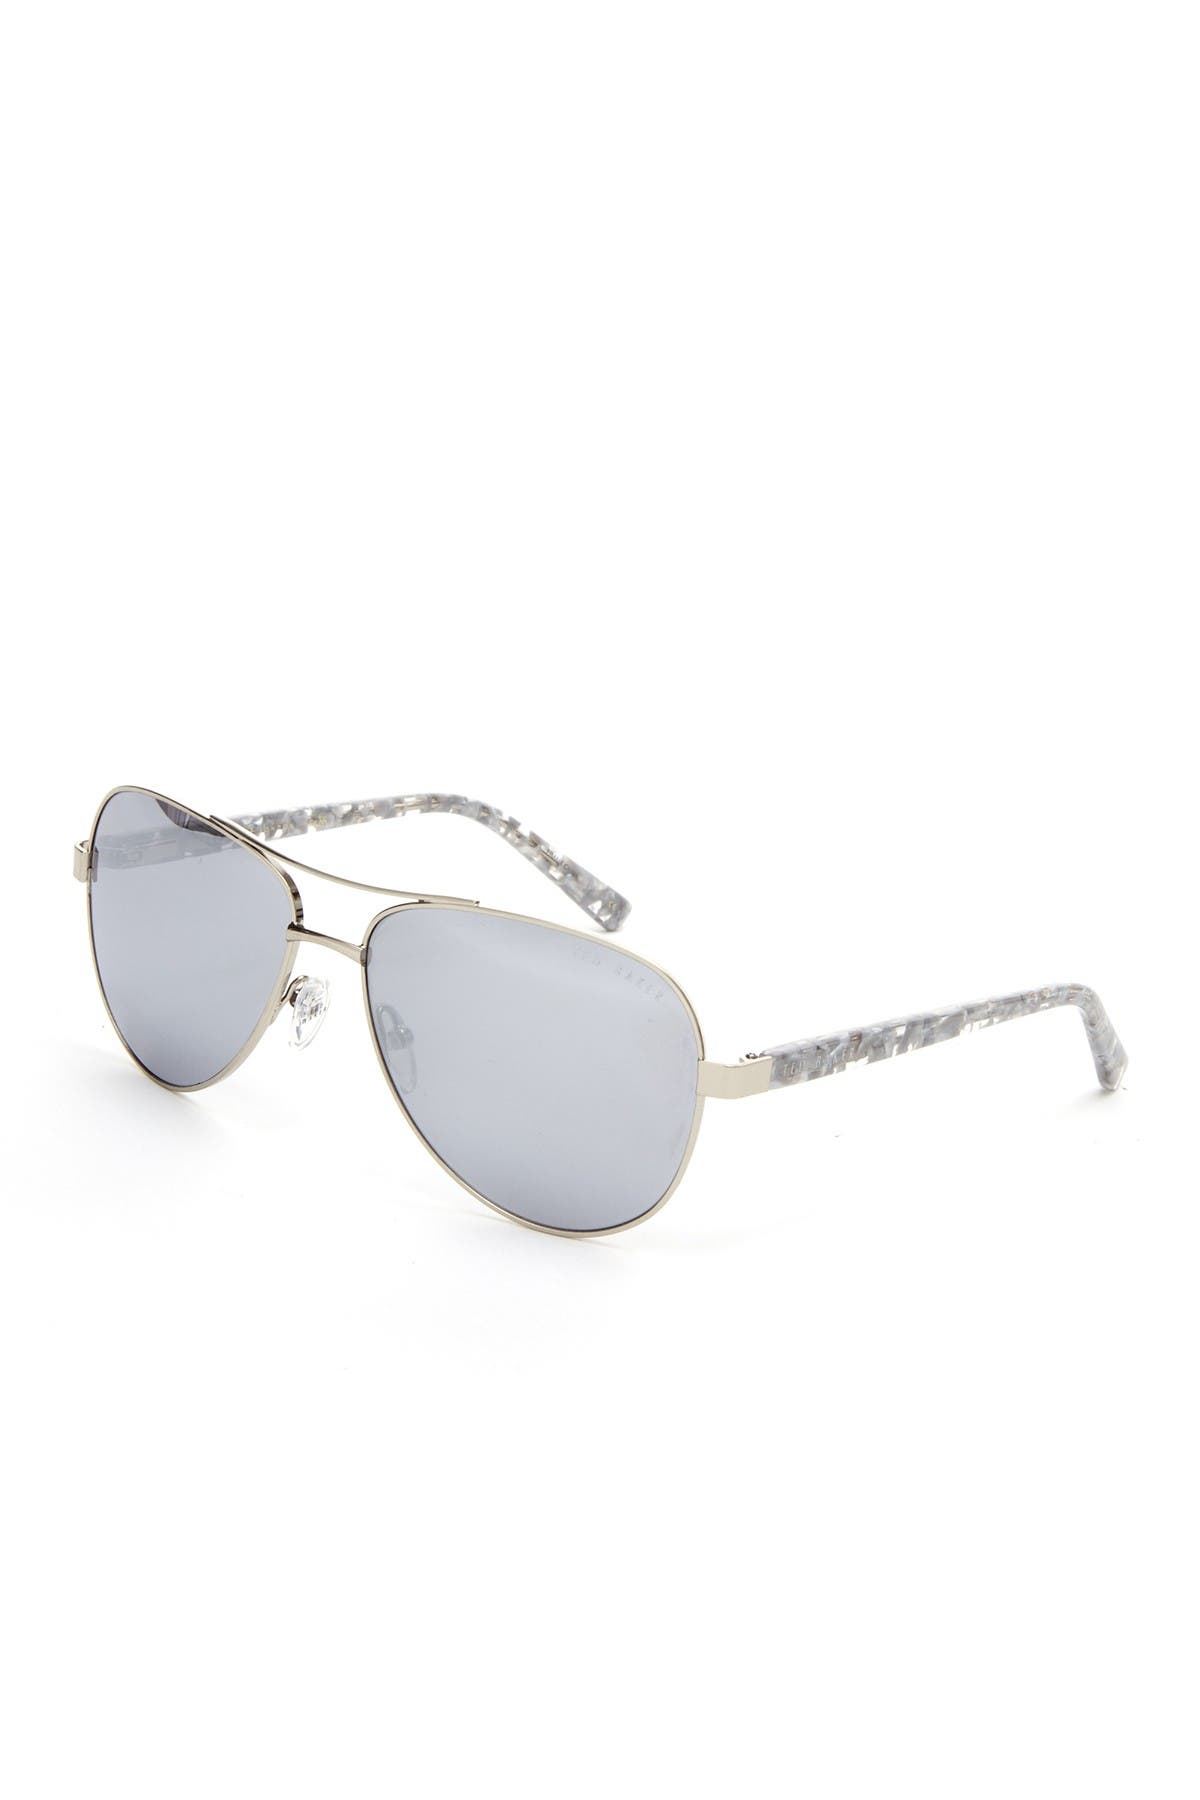 Ted Baker 57mm Metal Frame Aviator Sunglasses In Silver9